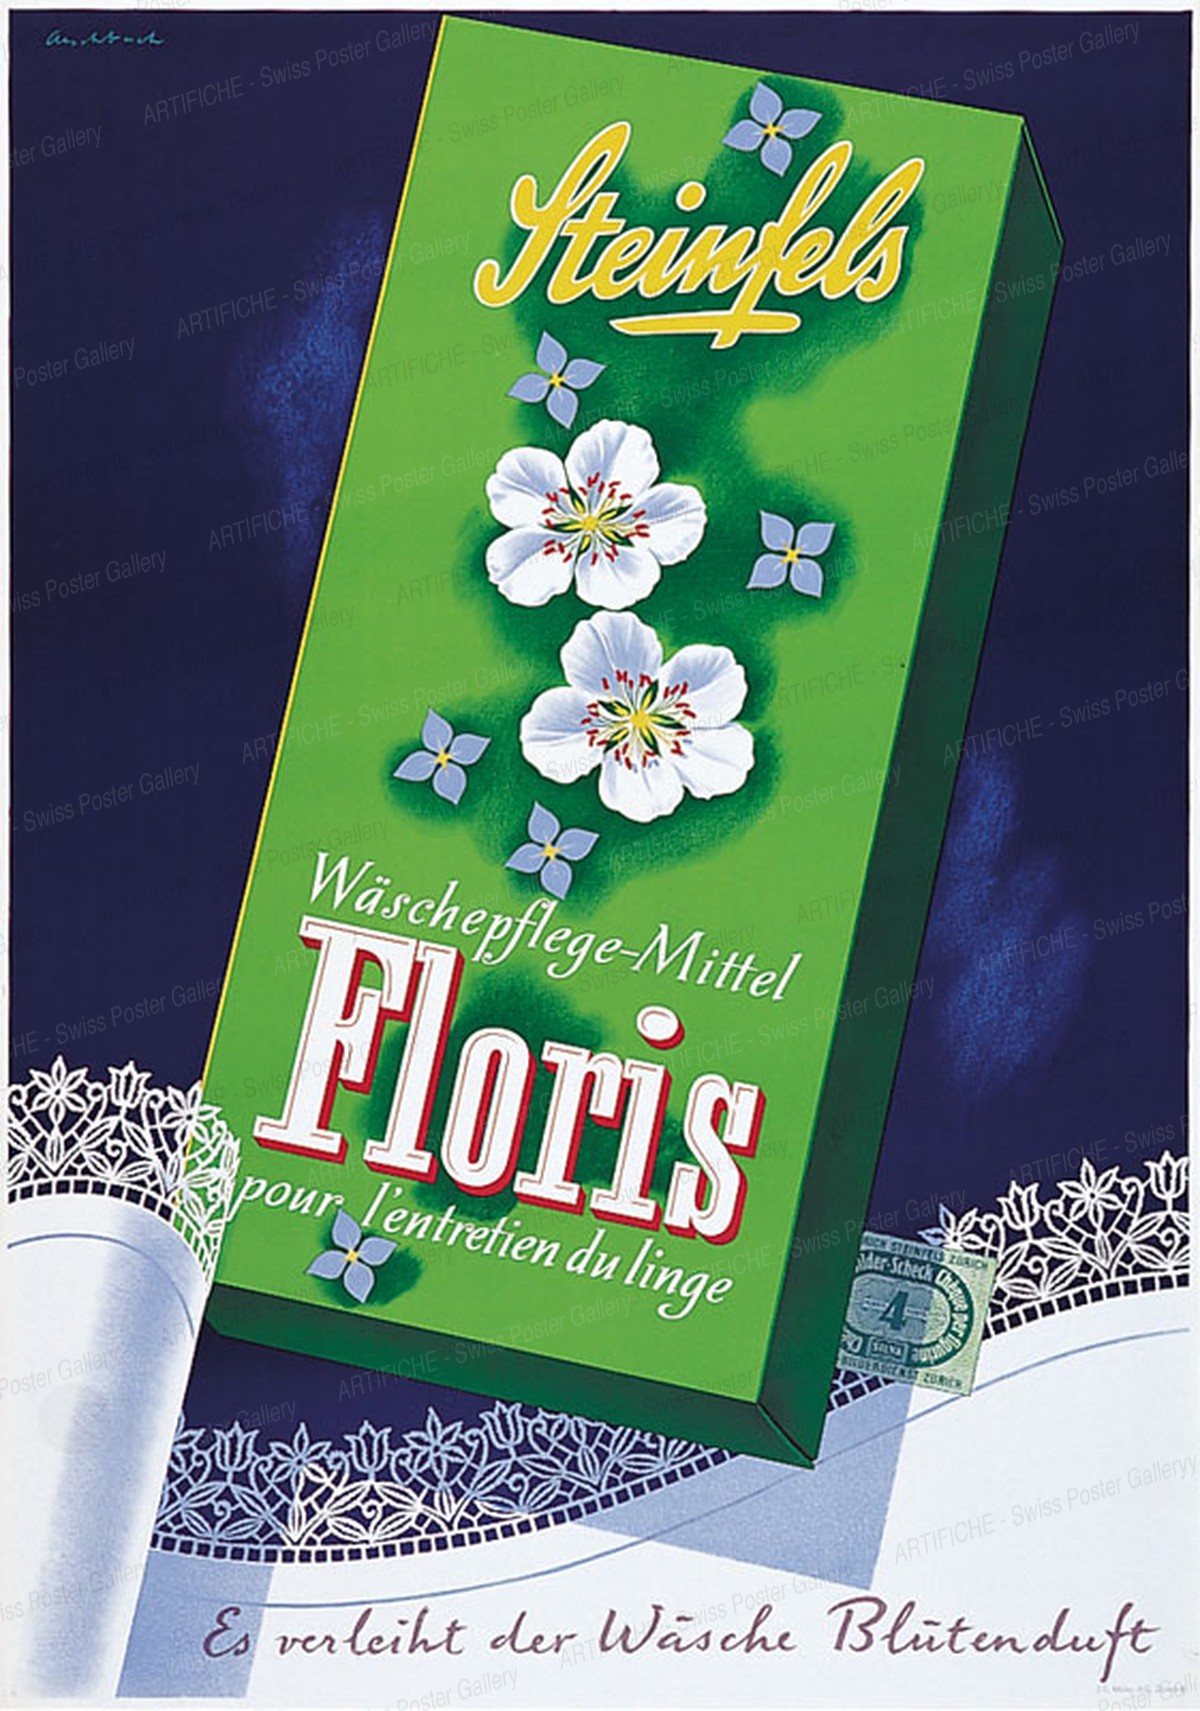 Steinfels Floris – flower-scented laundry care, Hans Aeschbach